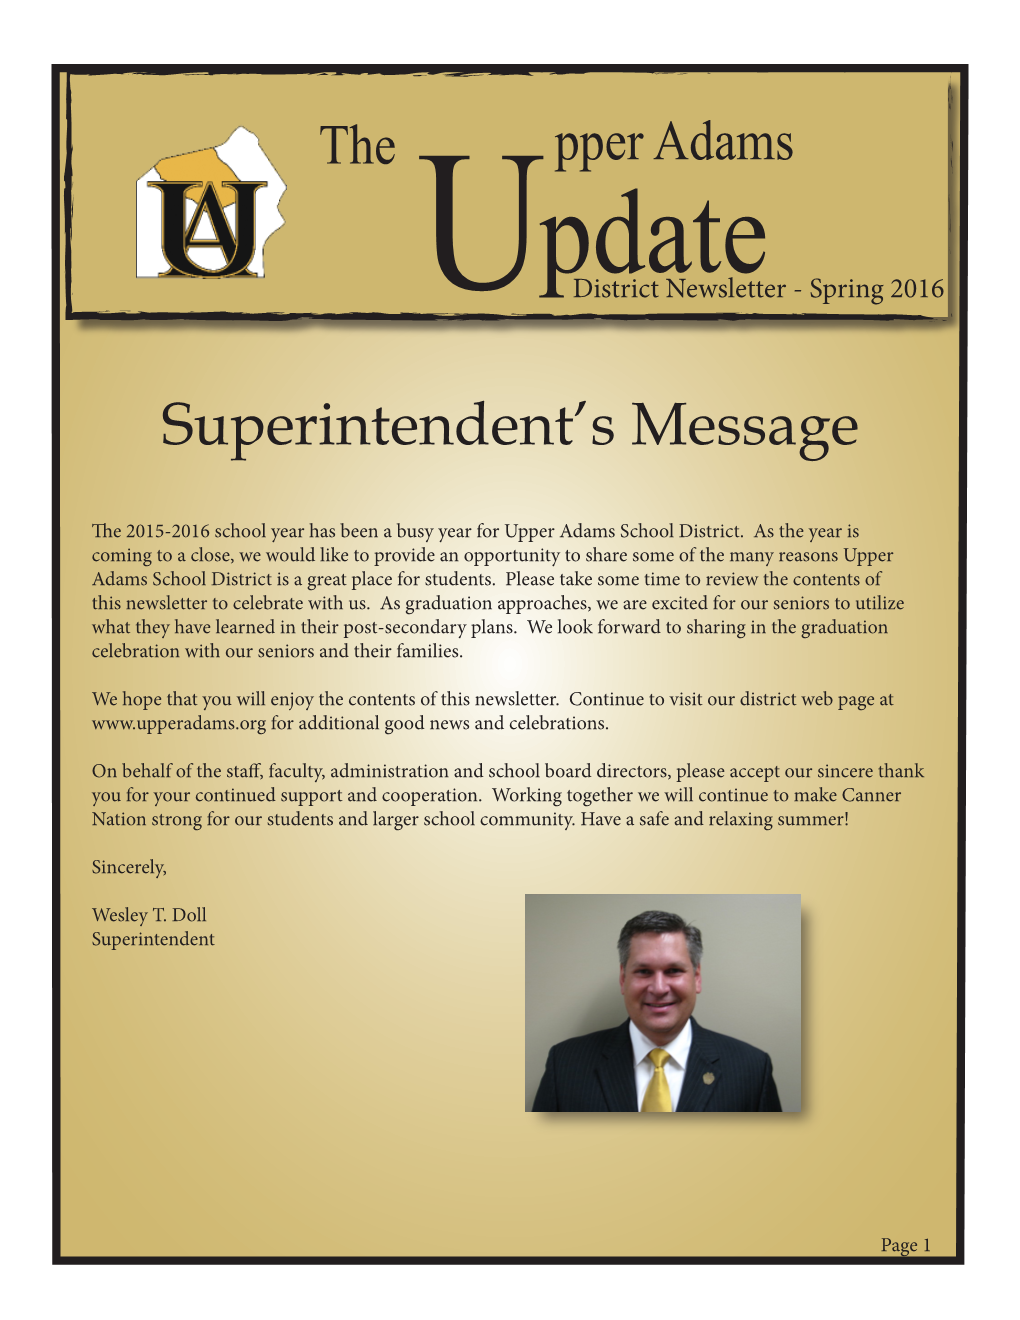 Superintendent's Message